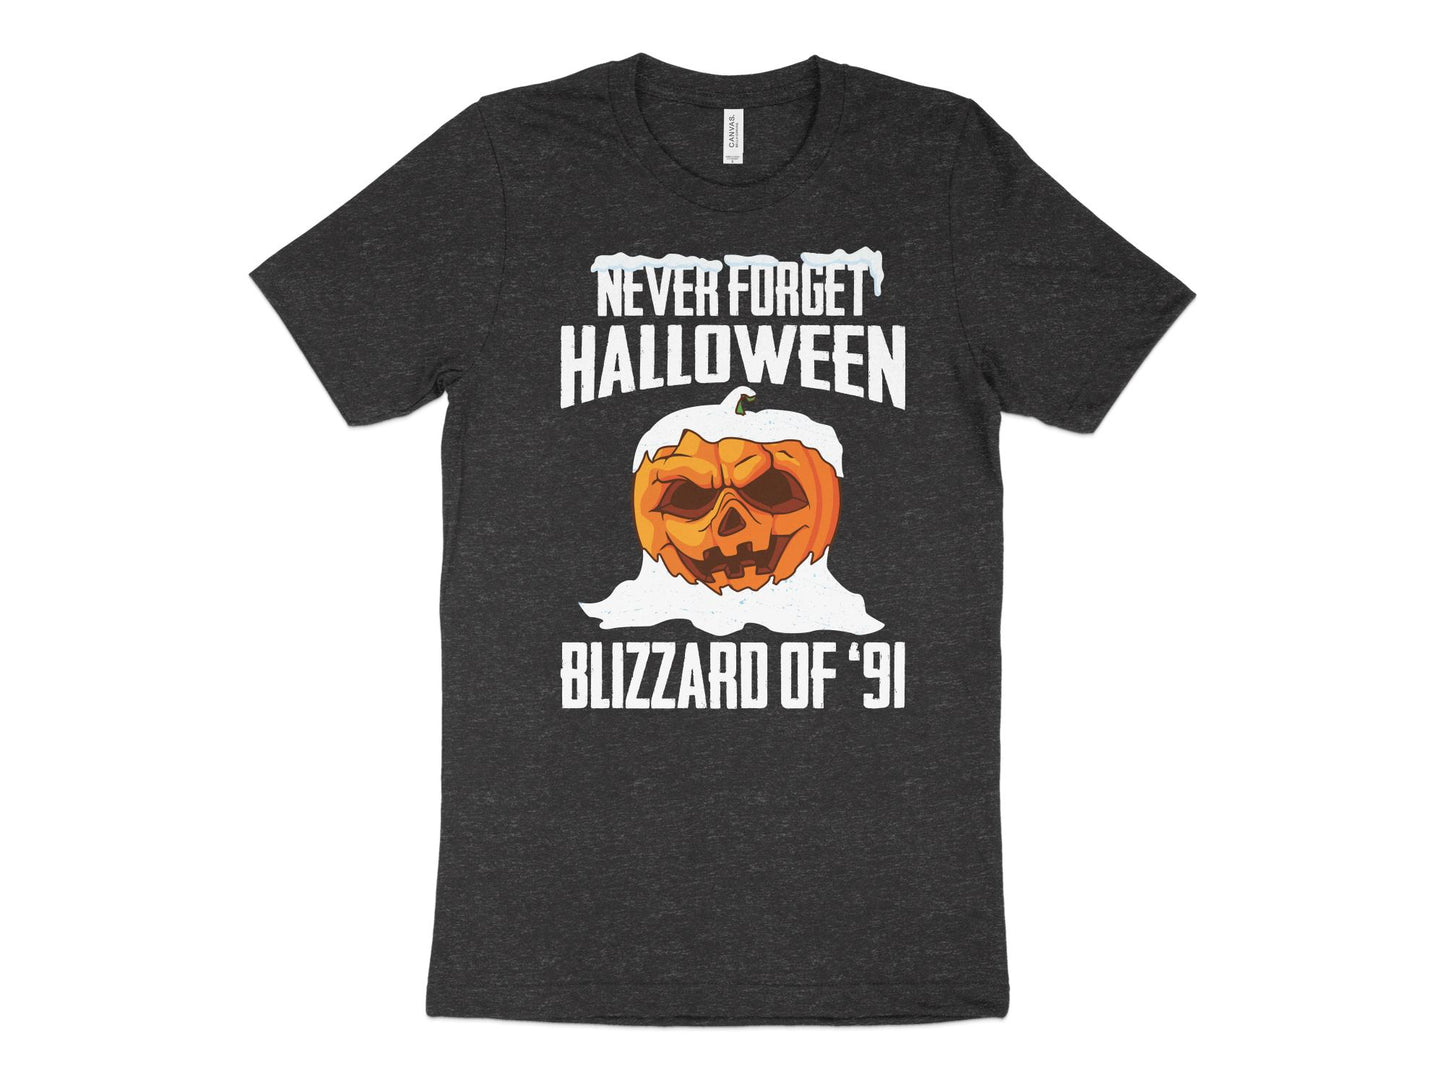 Minnesota Blizzard Halloween 1991 Shirt, charcoal